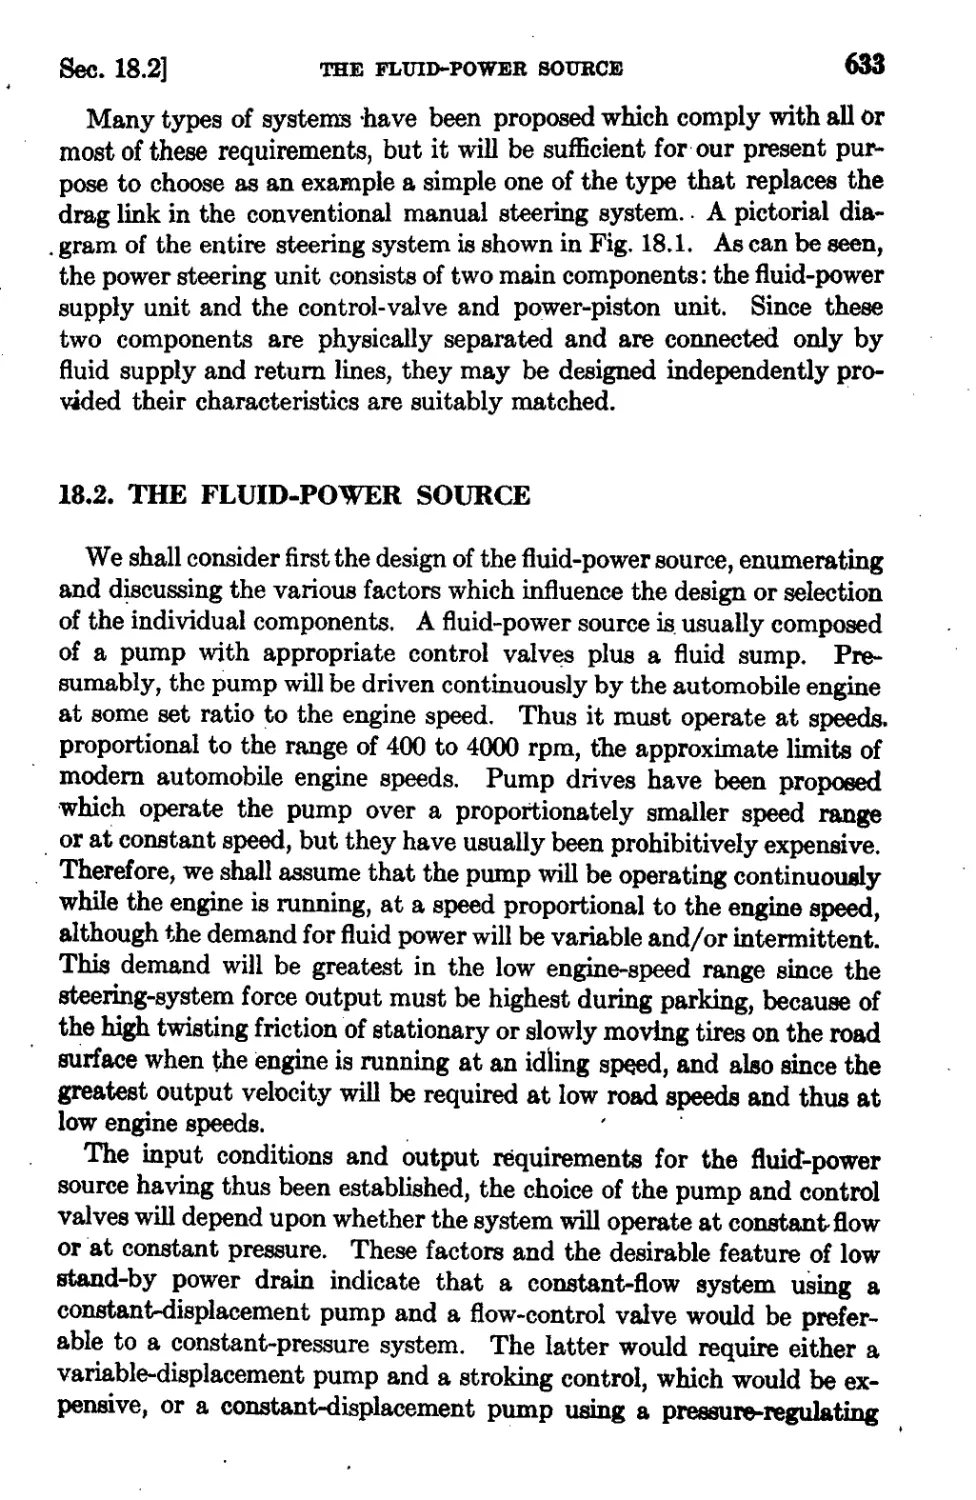 18.2 The Fluid-Power Source